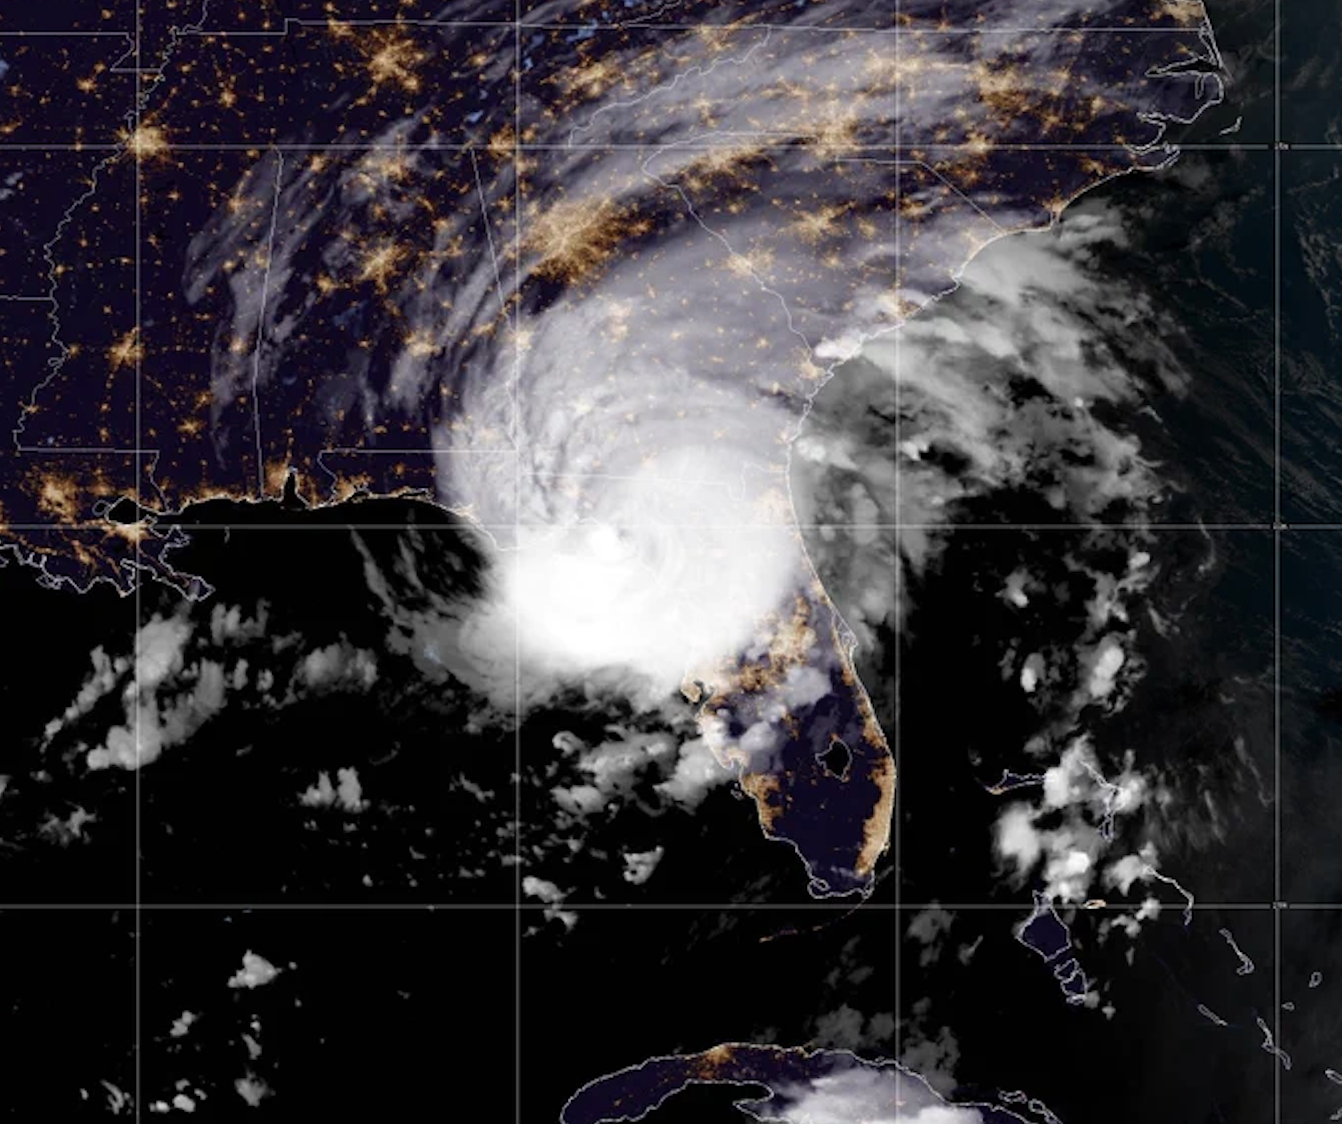     L'ouragan de catégorie 3 Idalia touche terre en Floride

